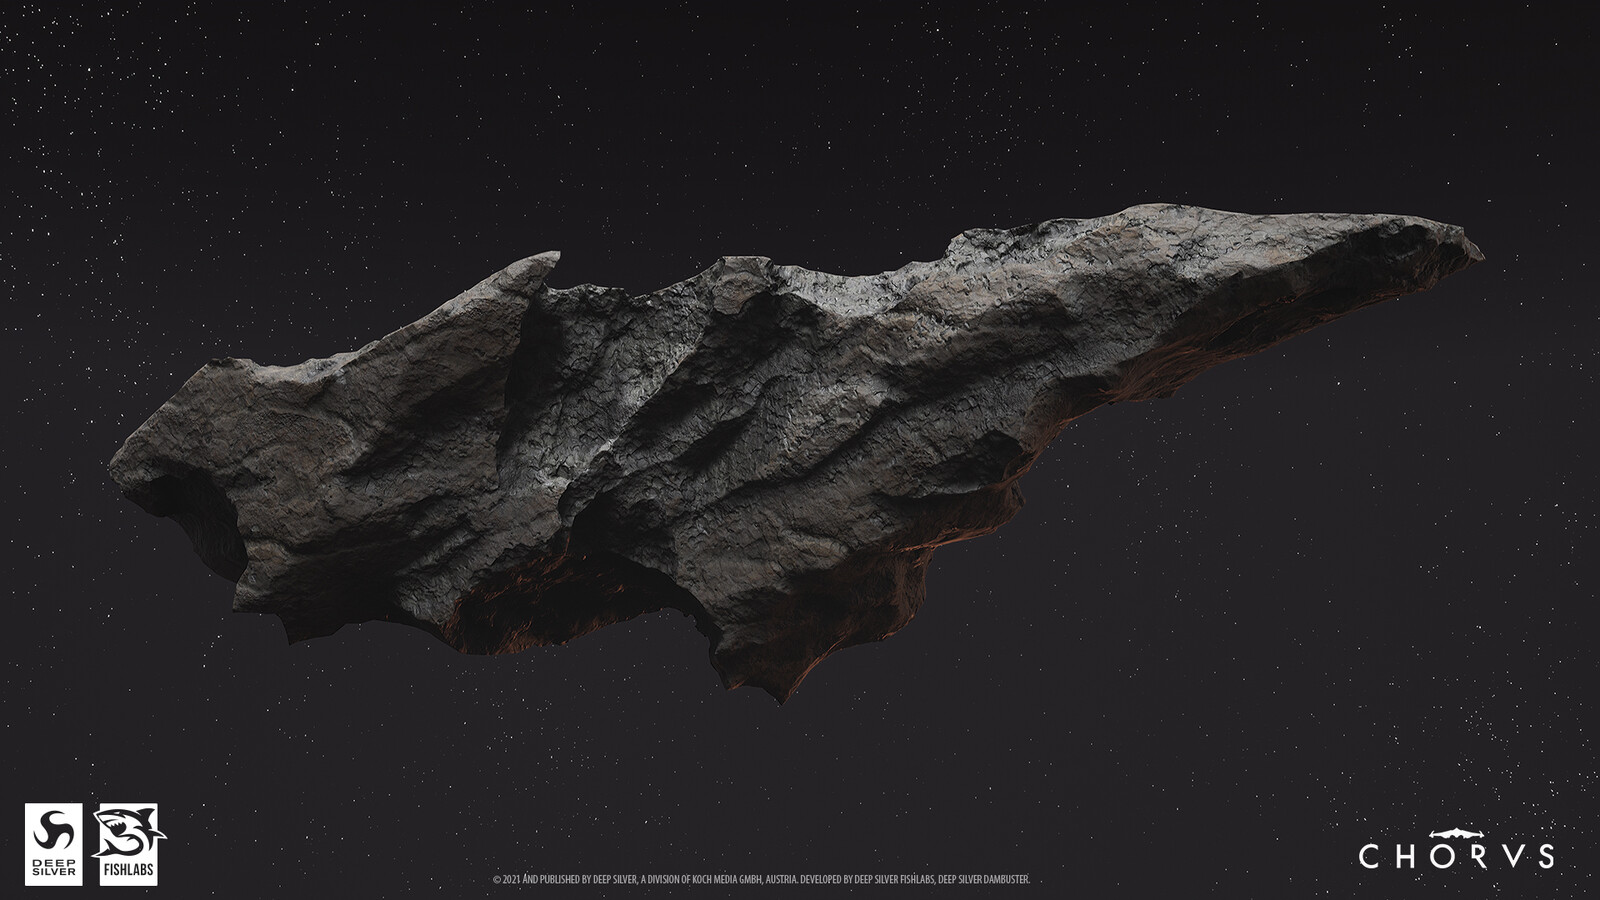 Large asteroid